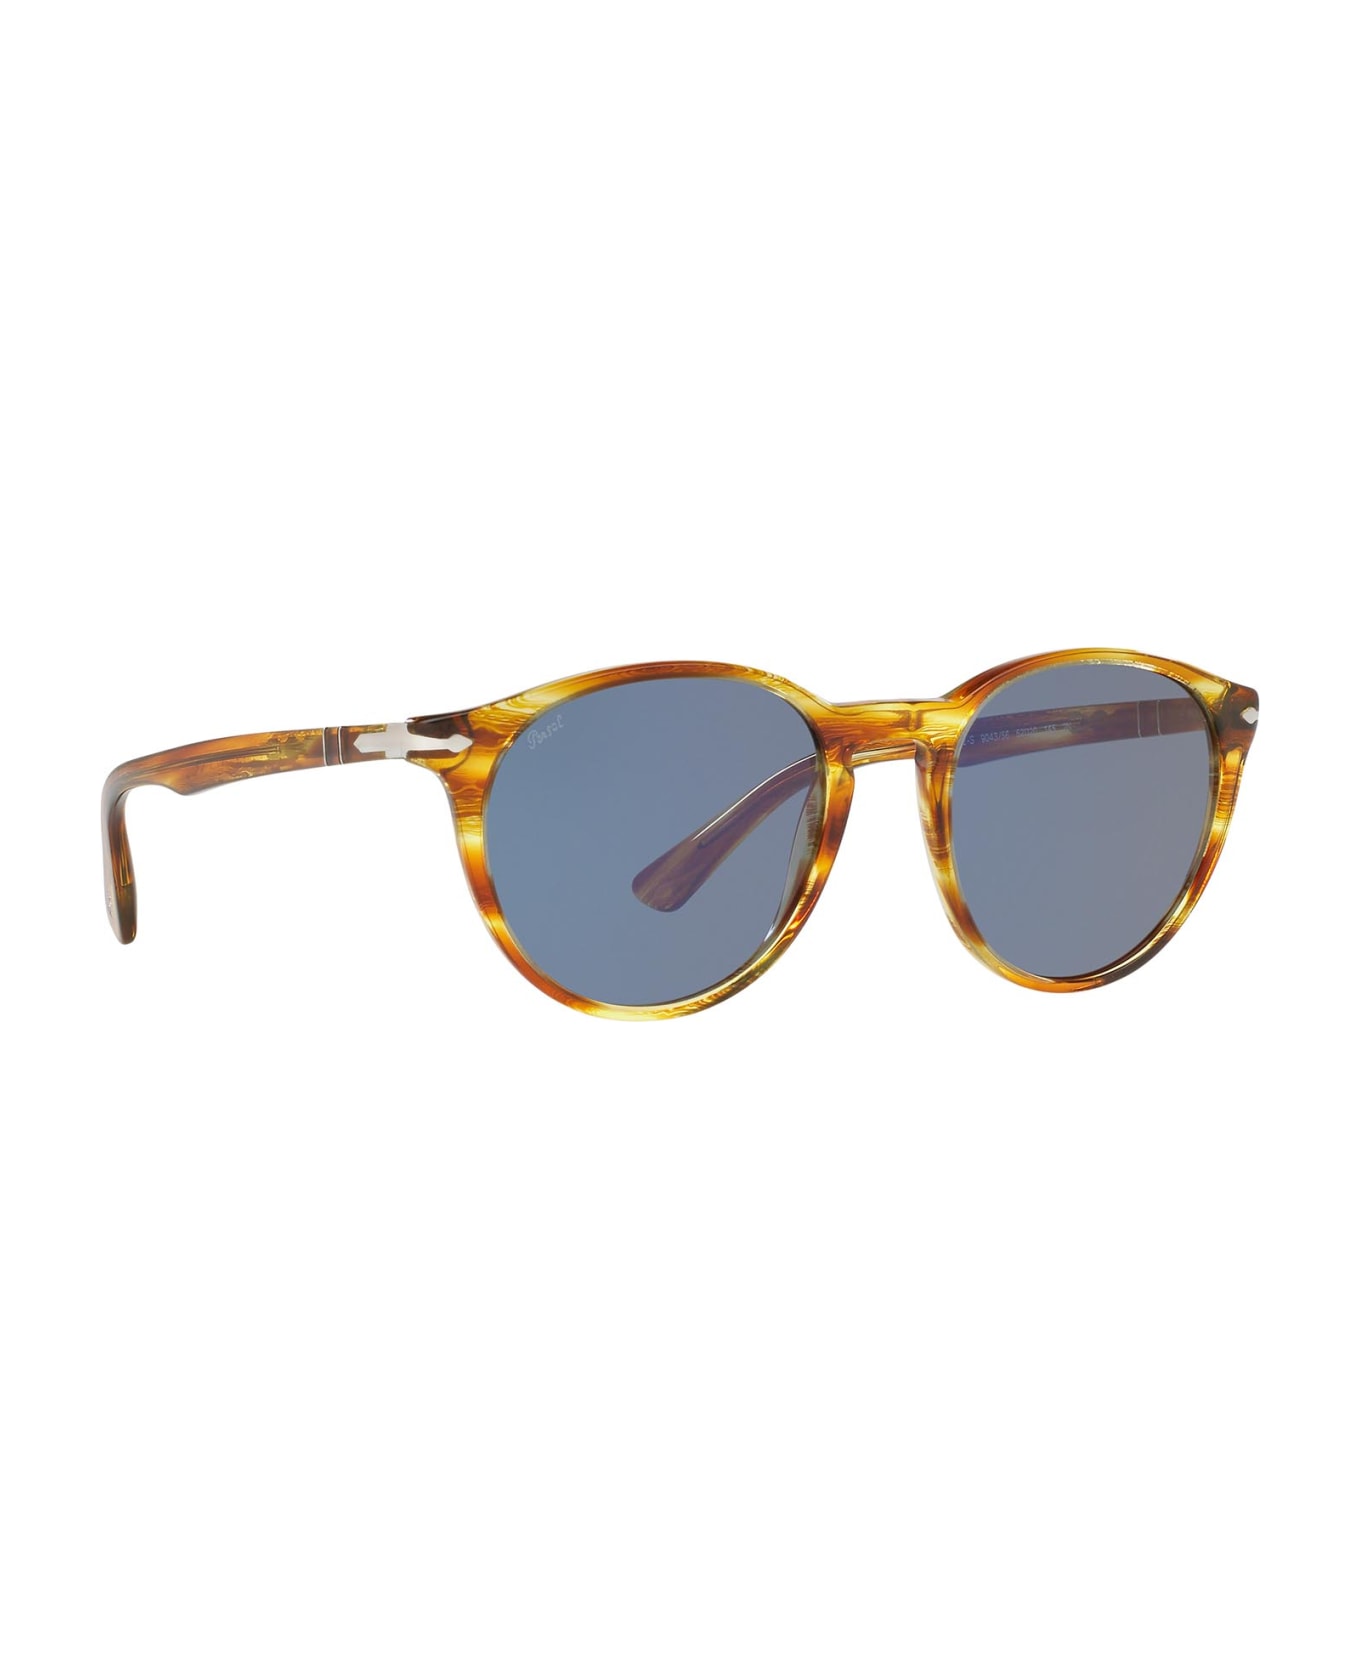 Persol Po3152s Brown Striped Yellow Sunglasses - Brown Striped Yellow